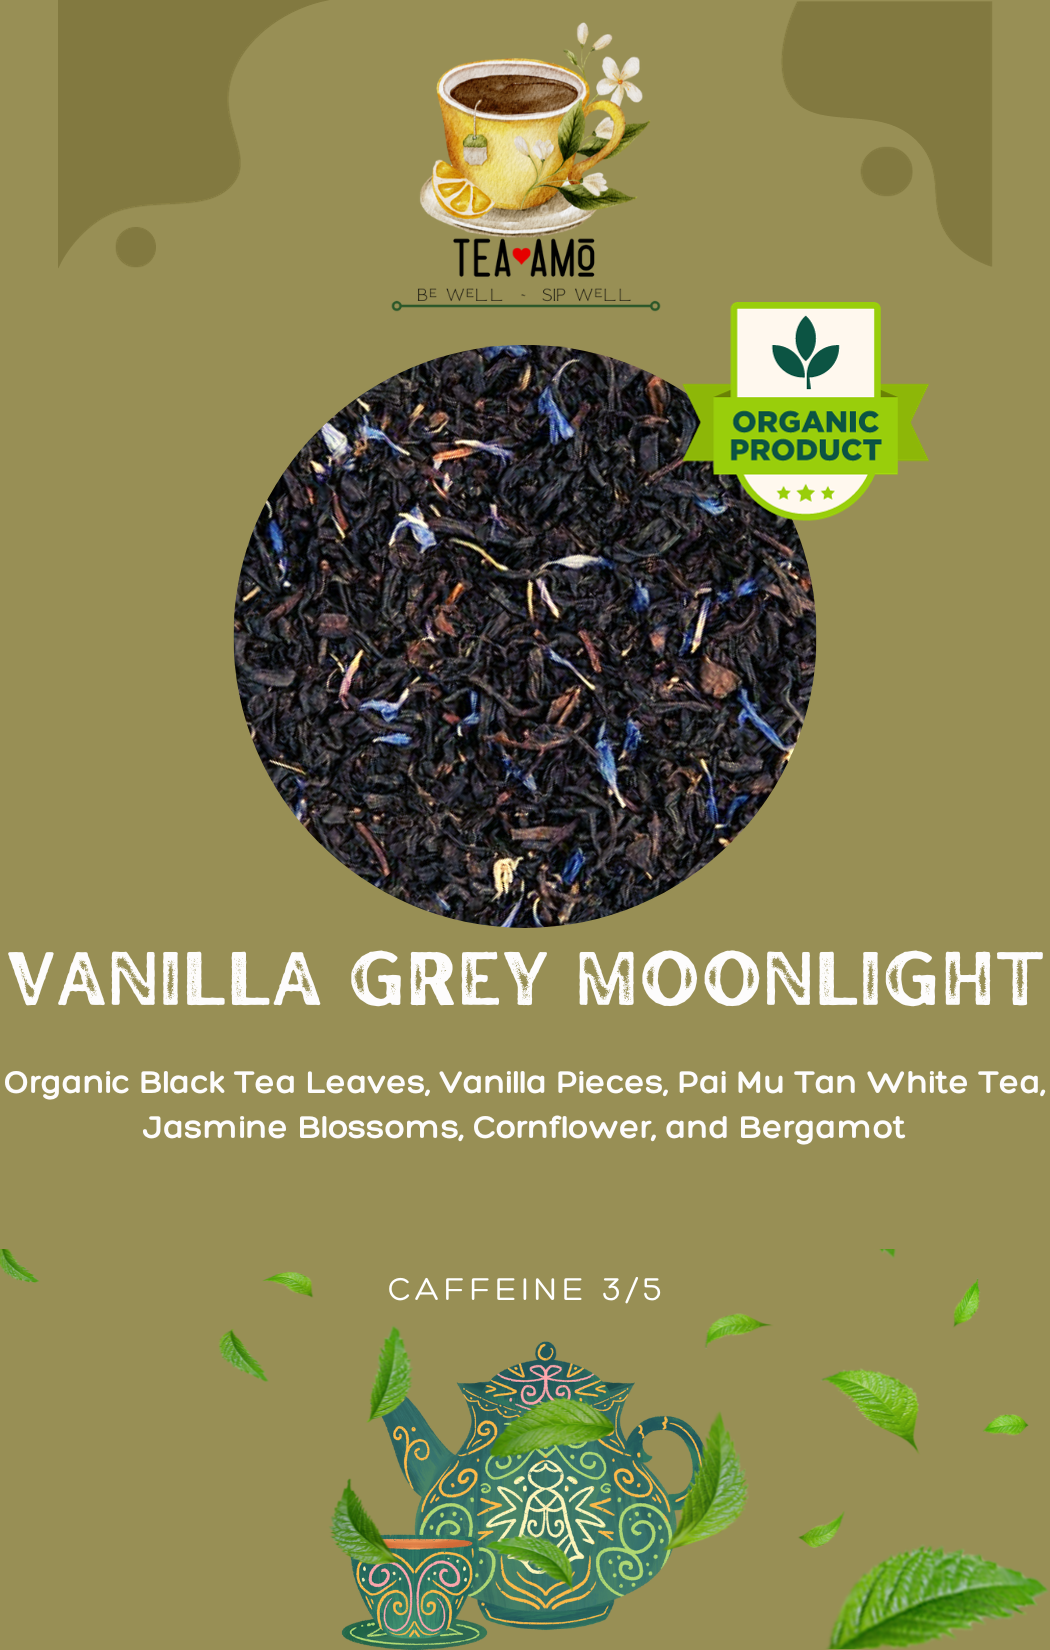 Tea Amo Wellness: Vanilla Grey Moonlight (Organic) Tea